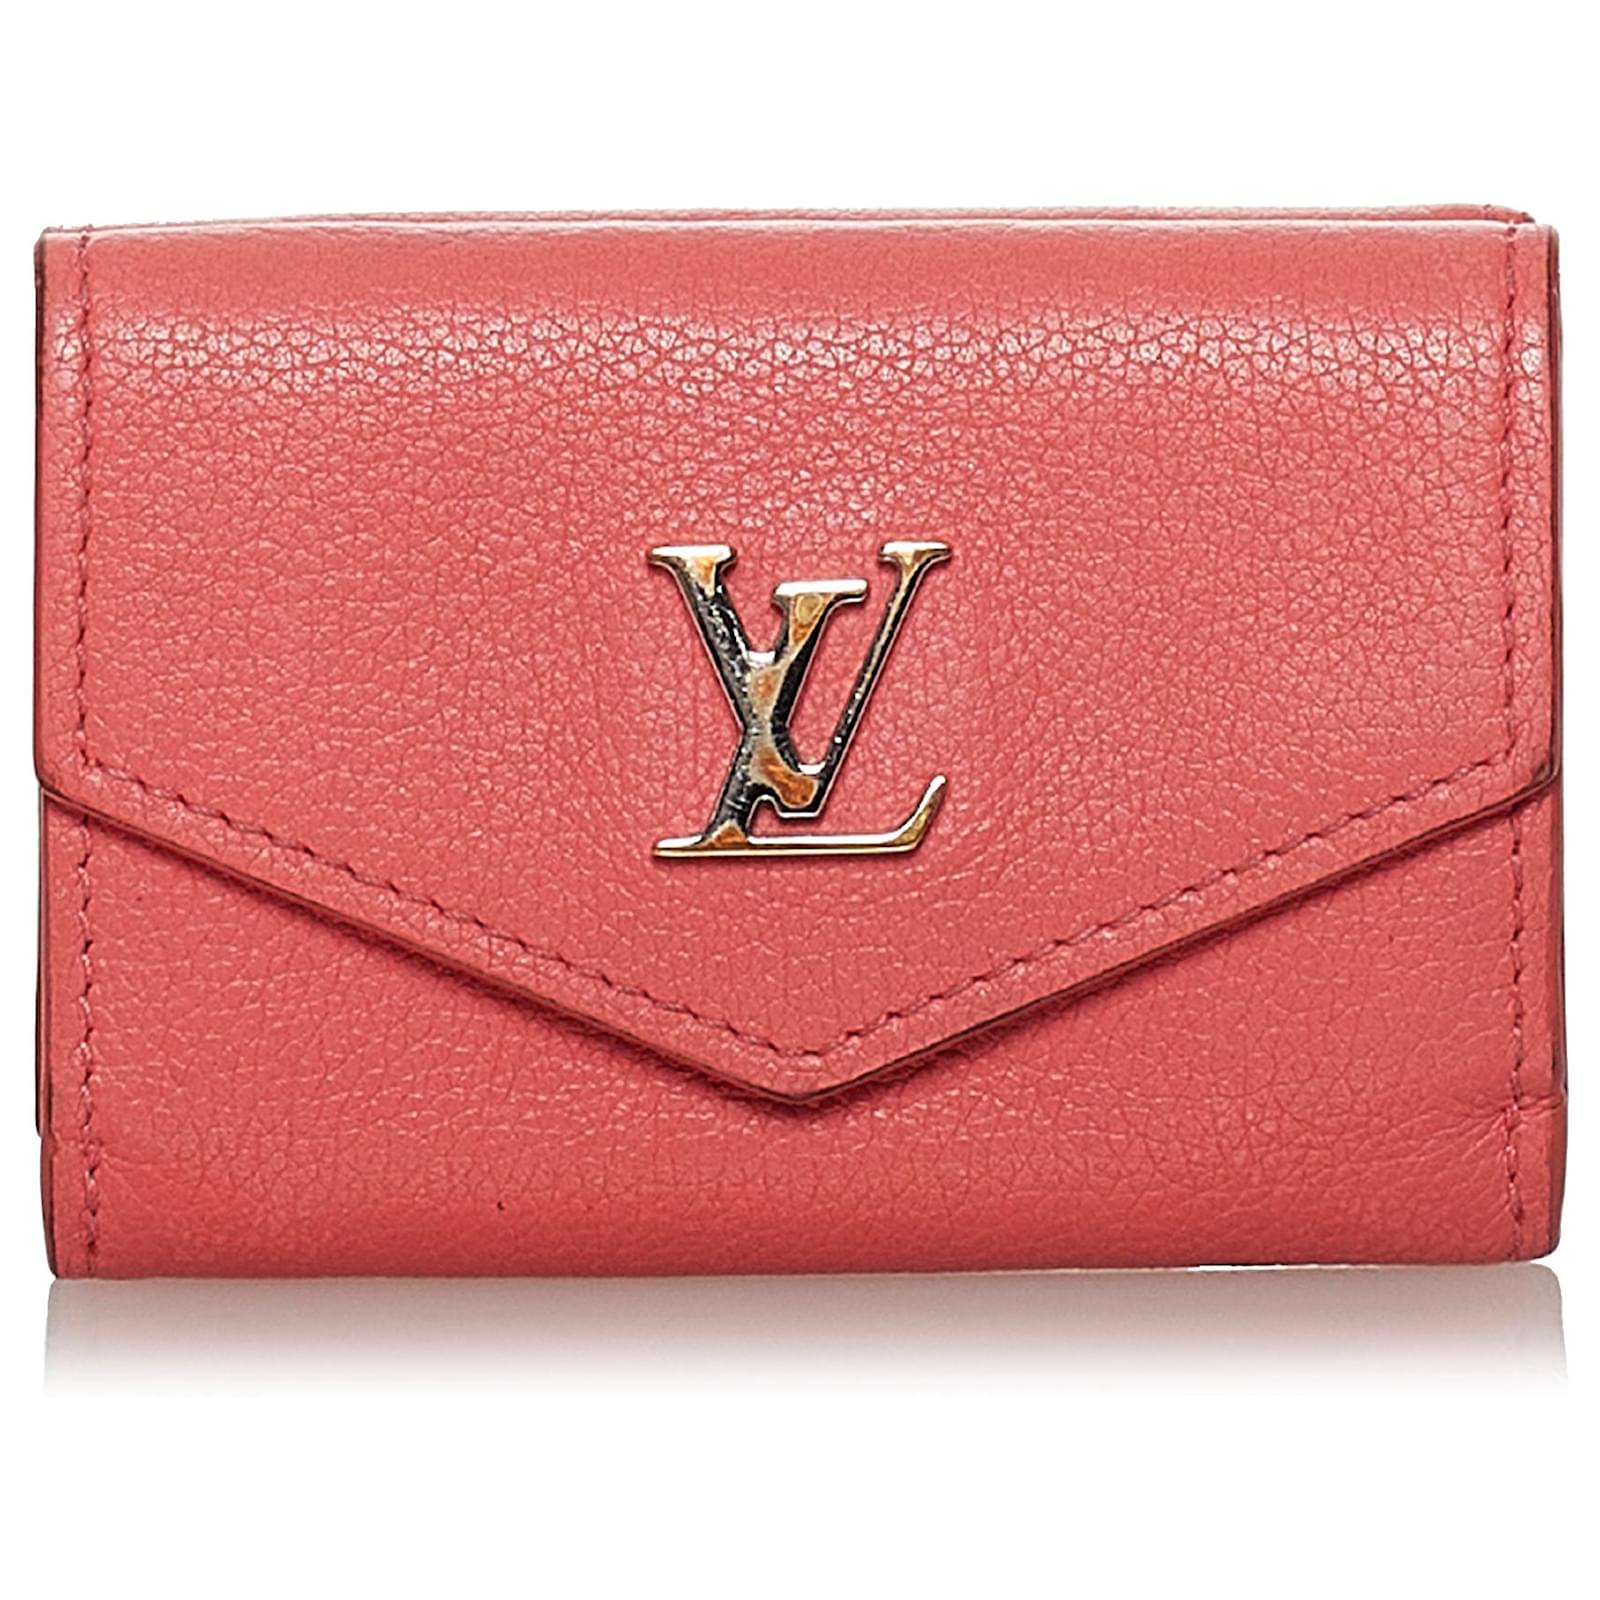 Louis Vuitton Lockmini Leather Compact Wallet on SALE